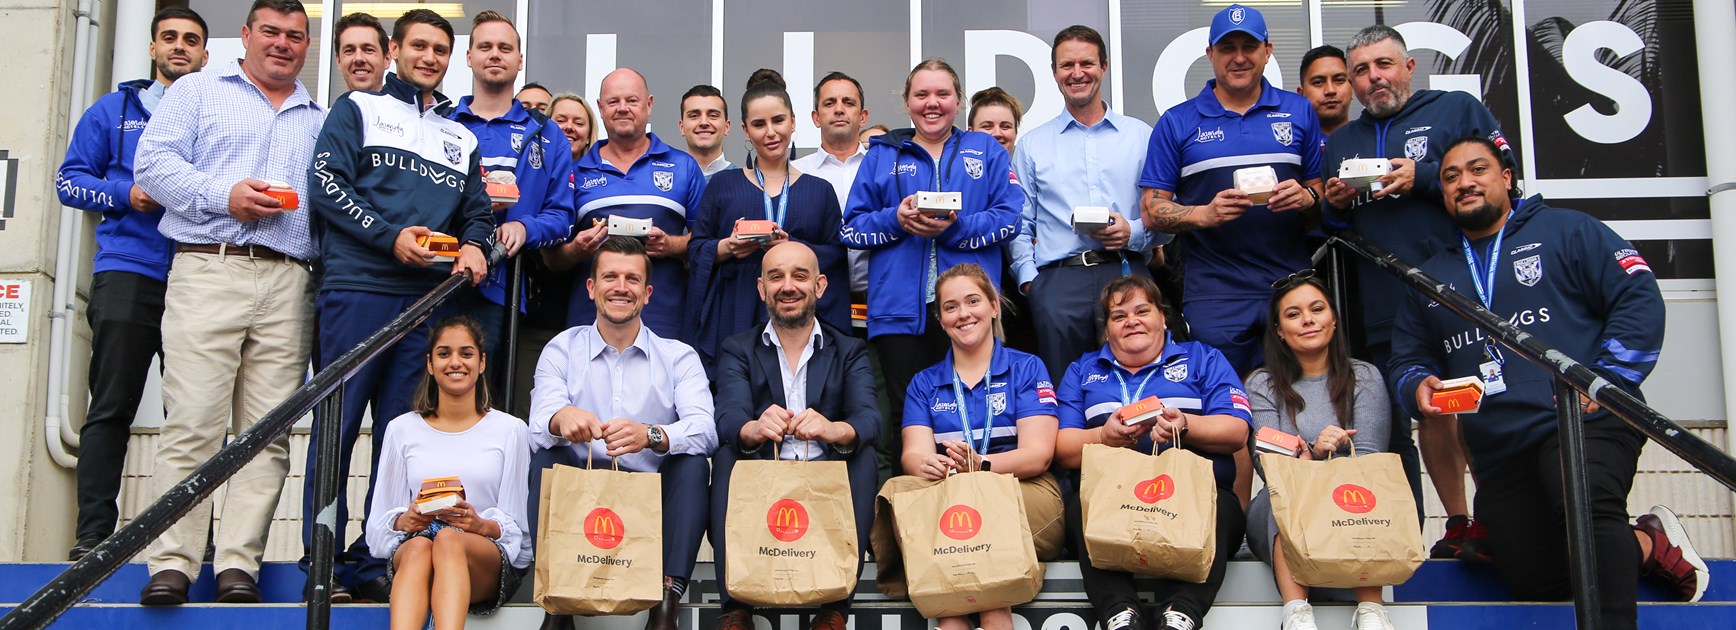 McDonald’s join Bulldogs as Official Quick Service Restaurant Partner